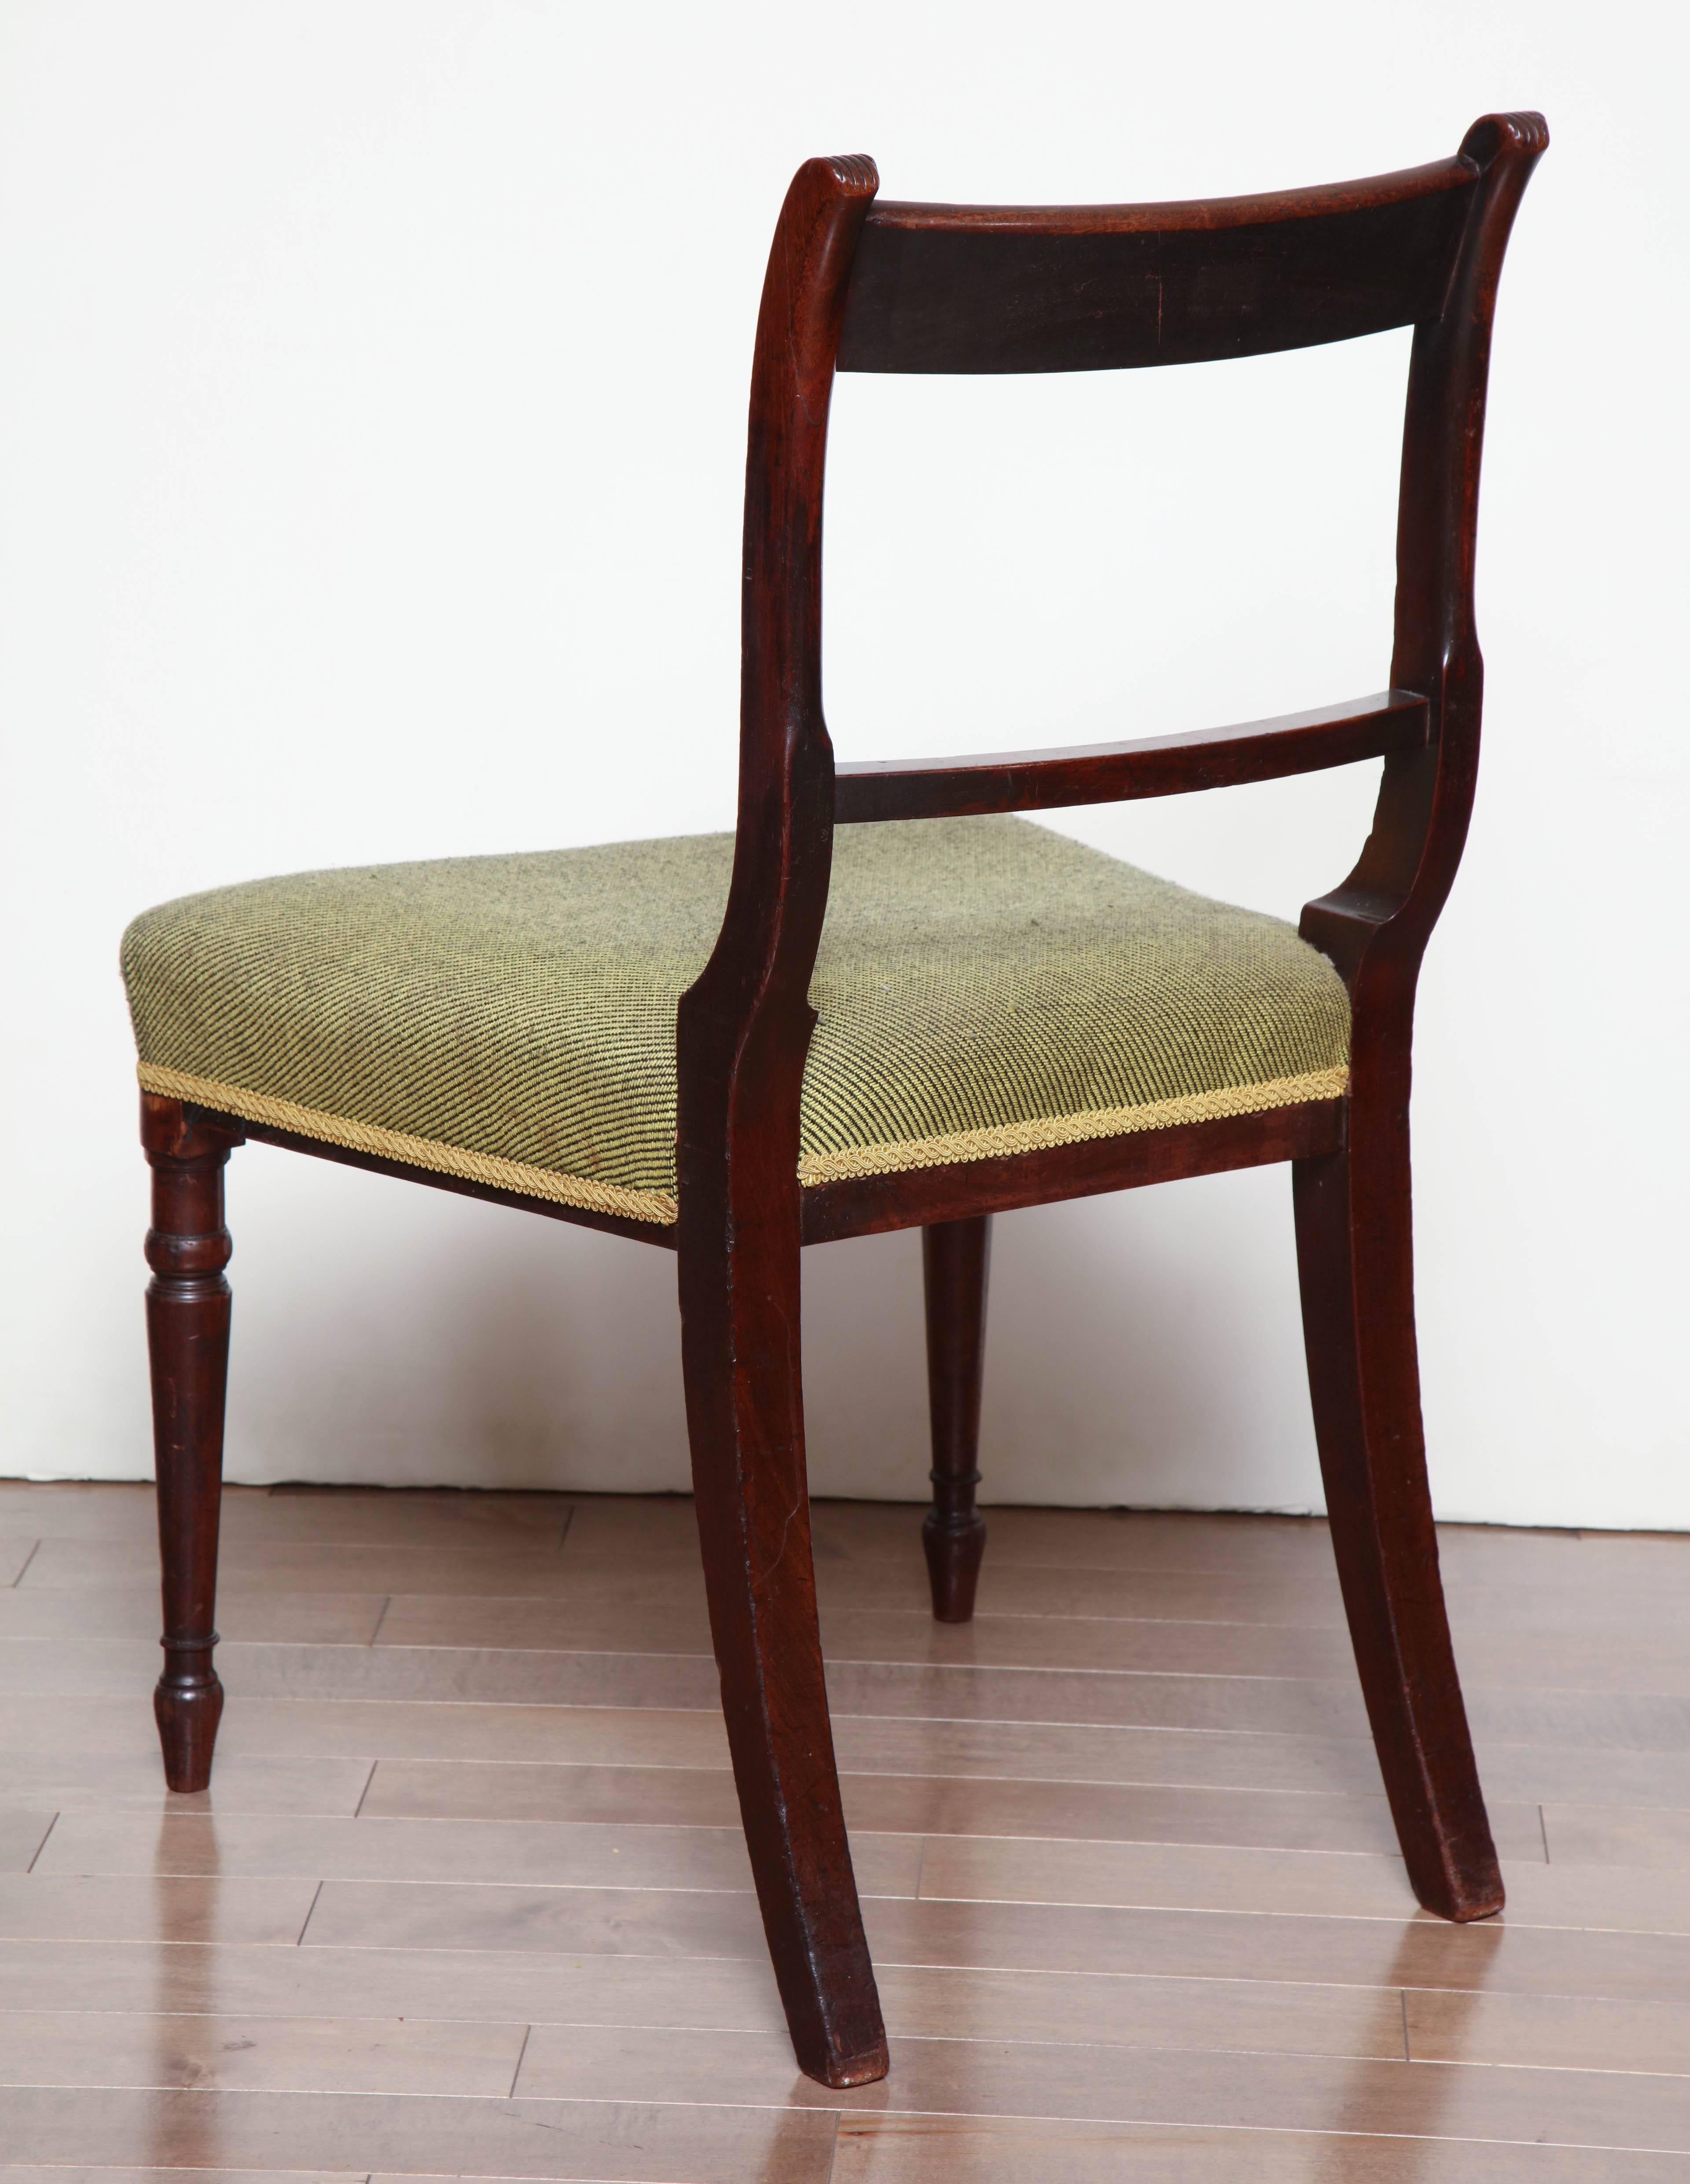 Early 19th Century Pair of Irish, Neoclassical Mahogany Side Chairs, circa 1810-1820